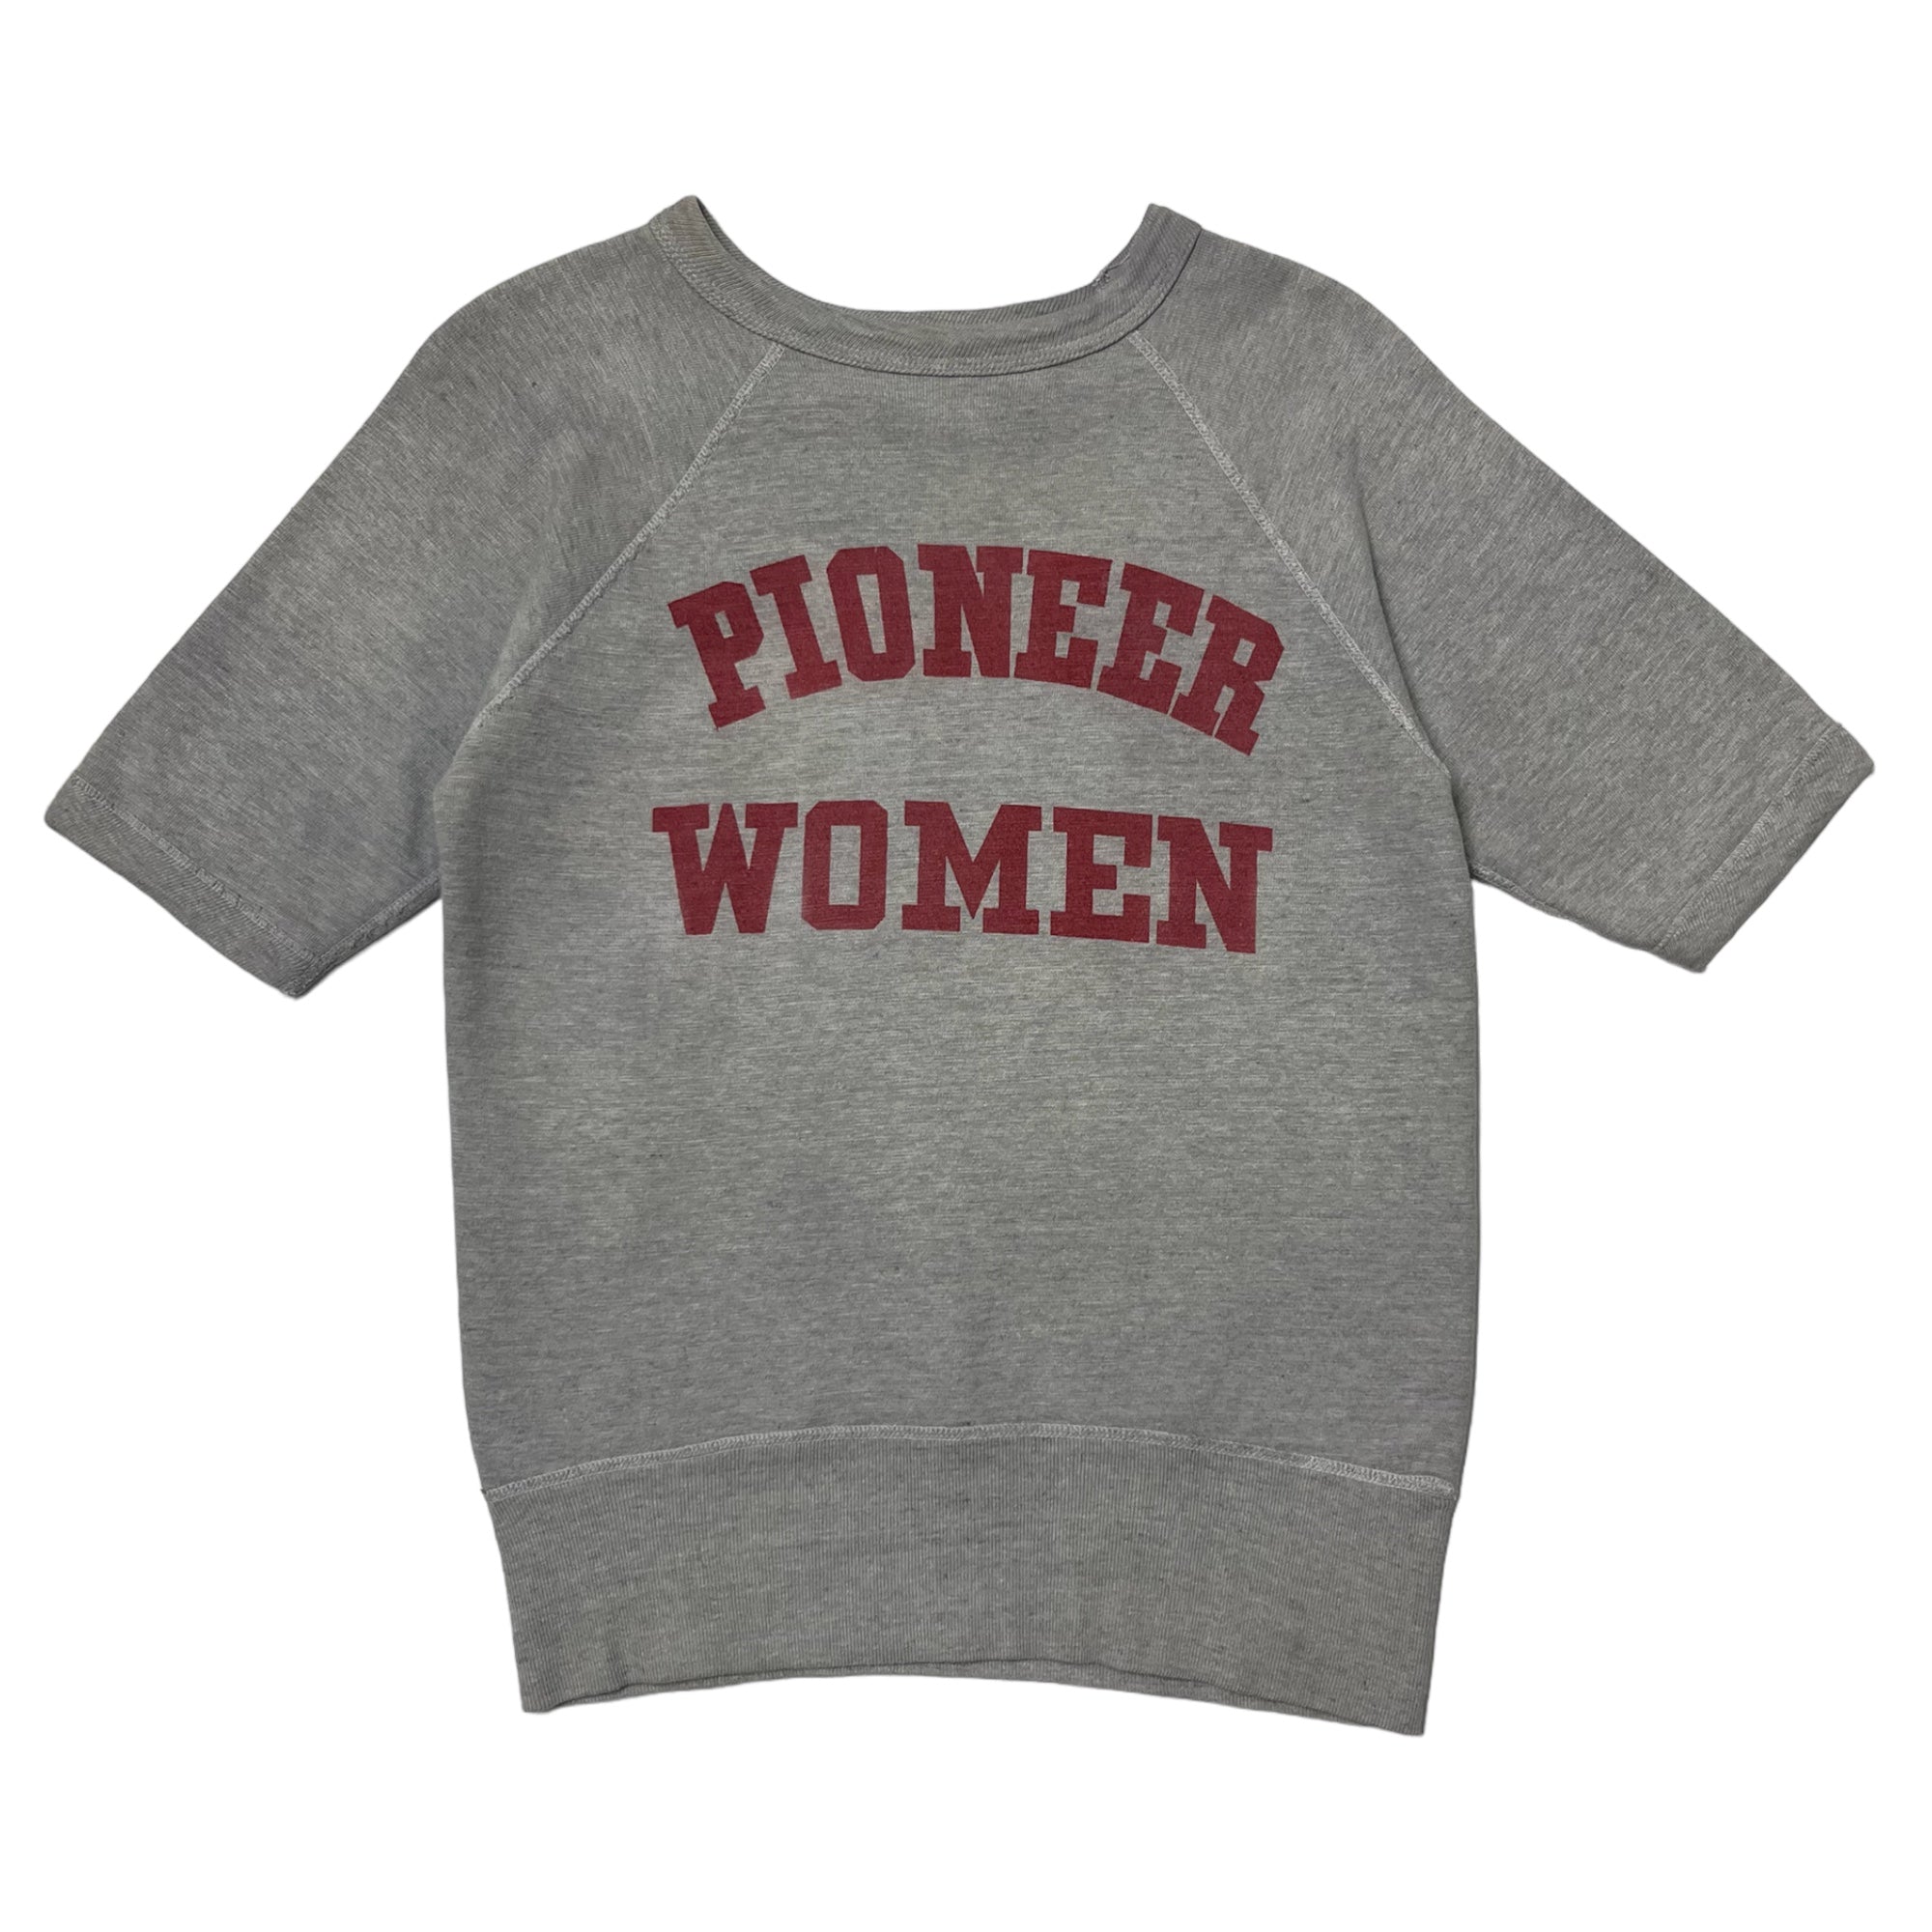 1950s/60s ‘Pioneer Women’ Shortsleeved Crewneck Sweatshirt - Heather Grey/Crimson - M